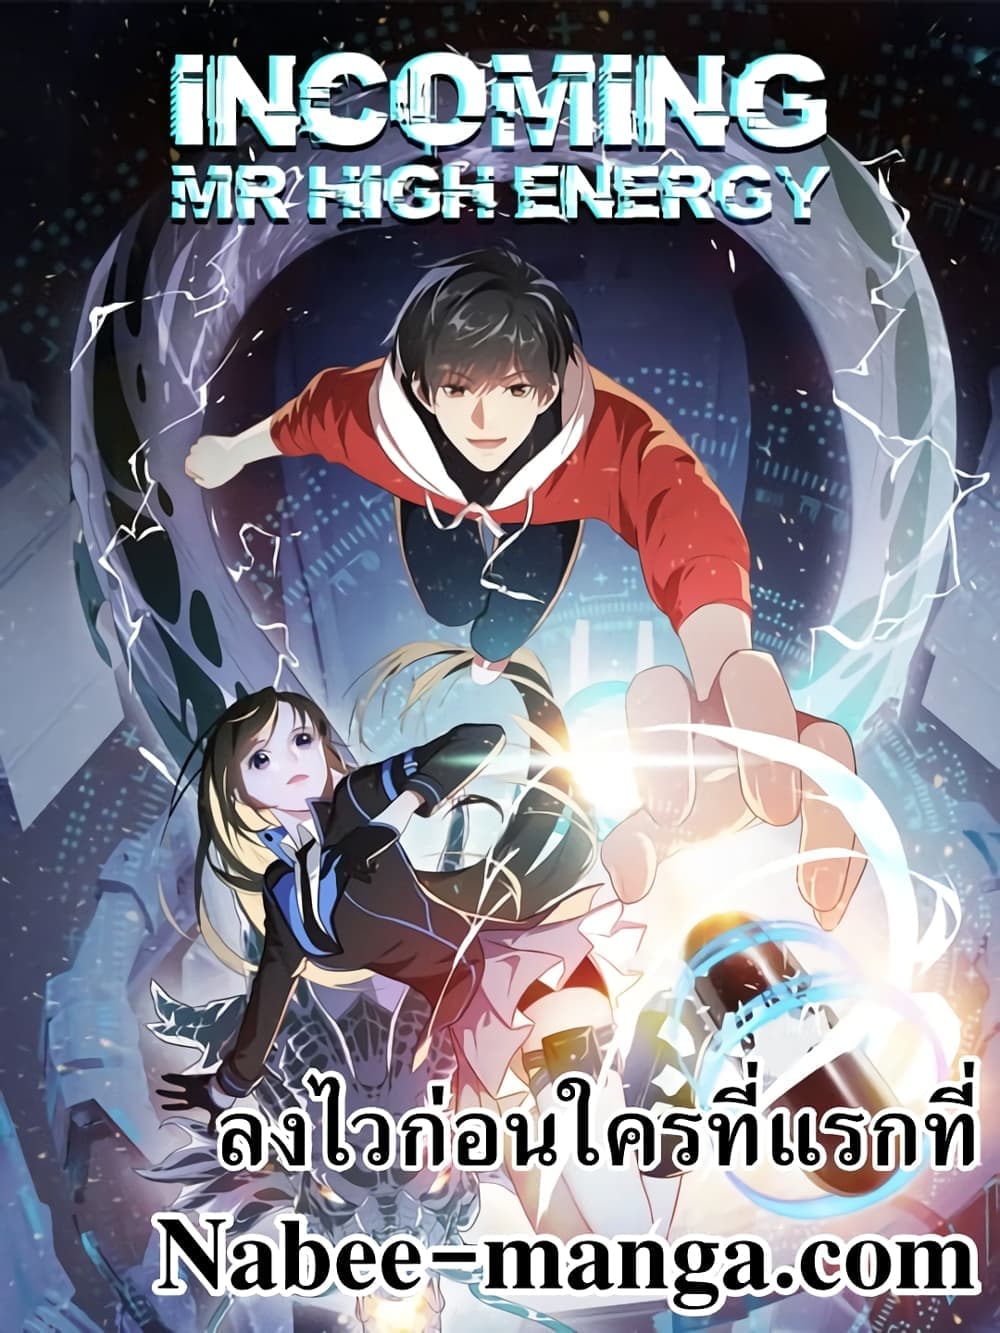 High Energy Strikes à¸à¸­à¸à¸à¸µà¹ 242 (1)